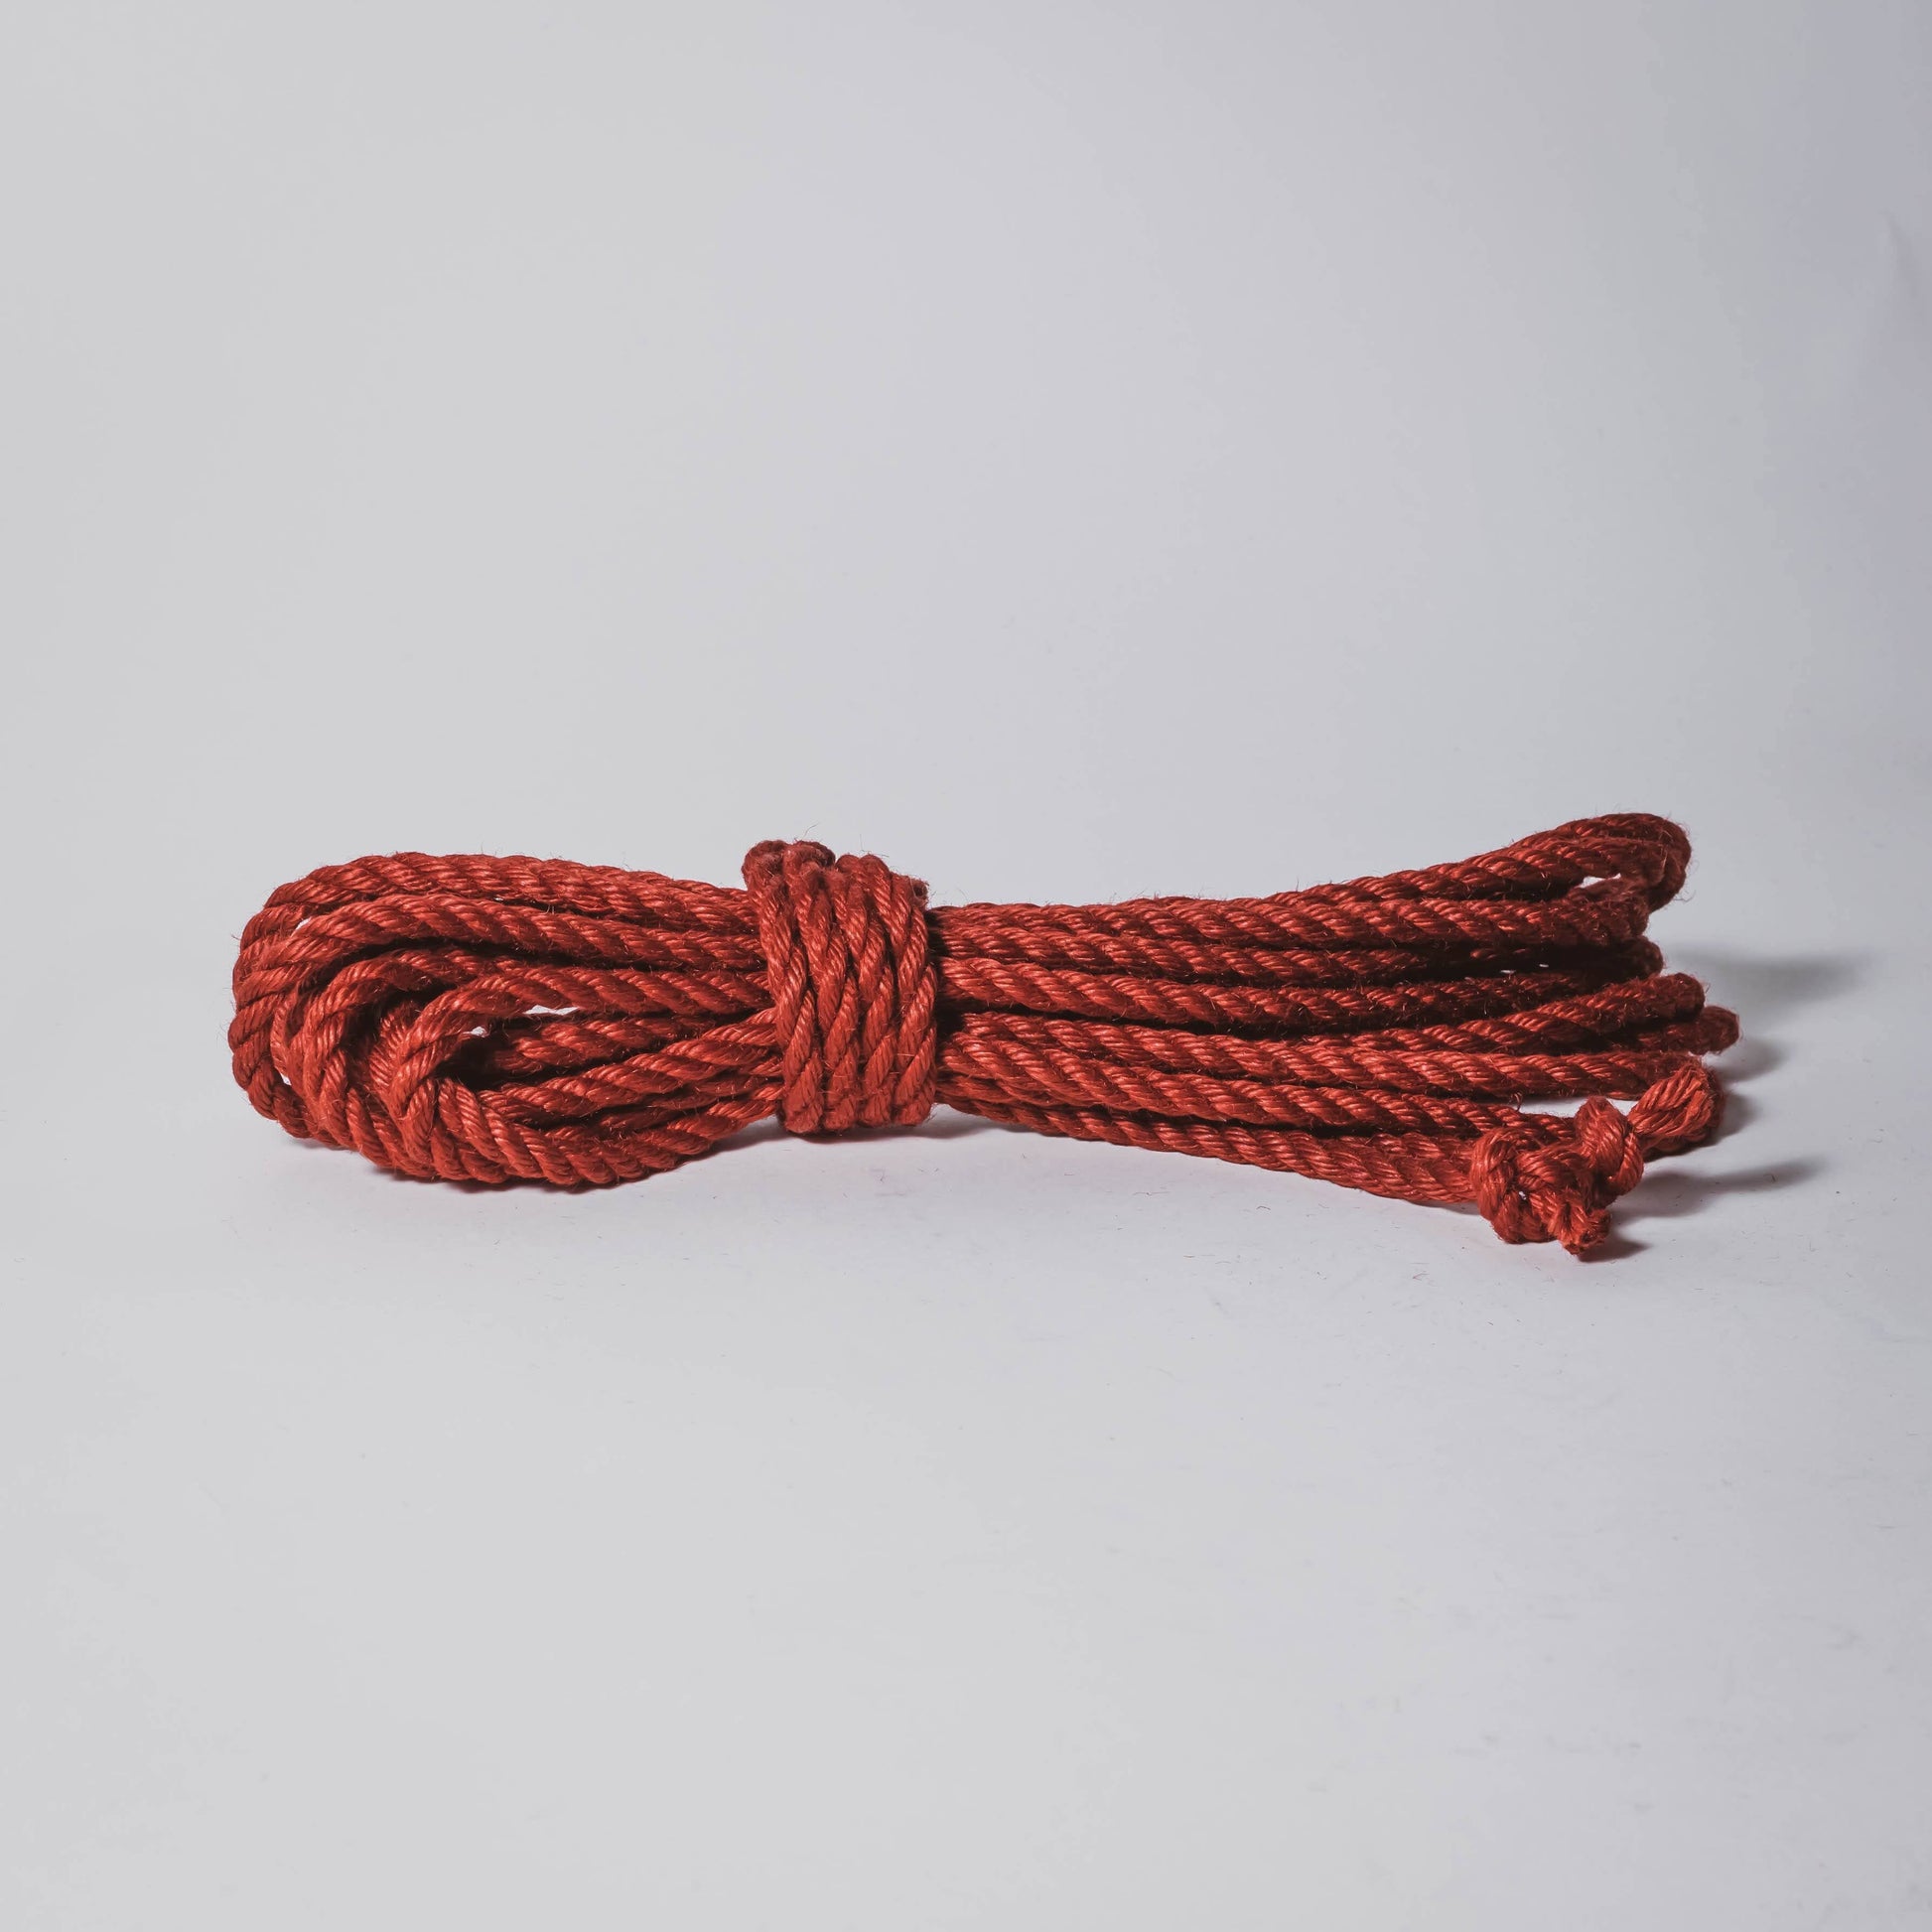 Treated Rope - 6mm Anatomie Red Jute Rope